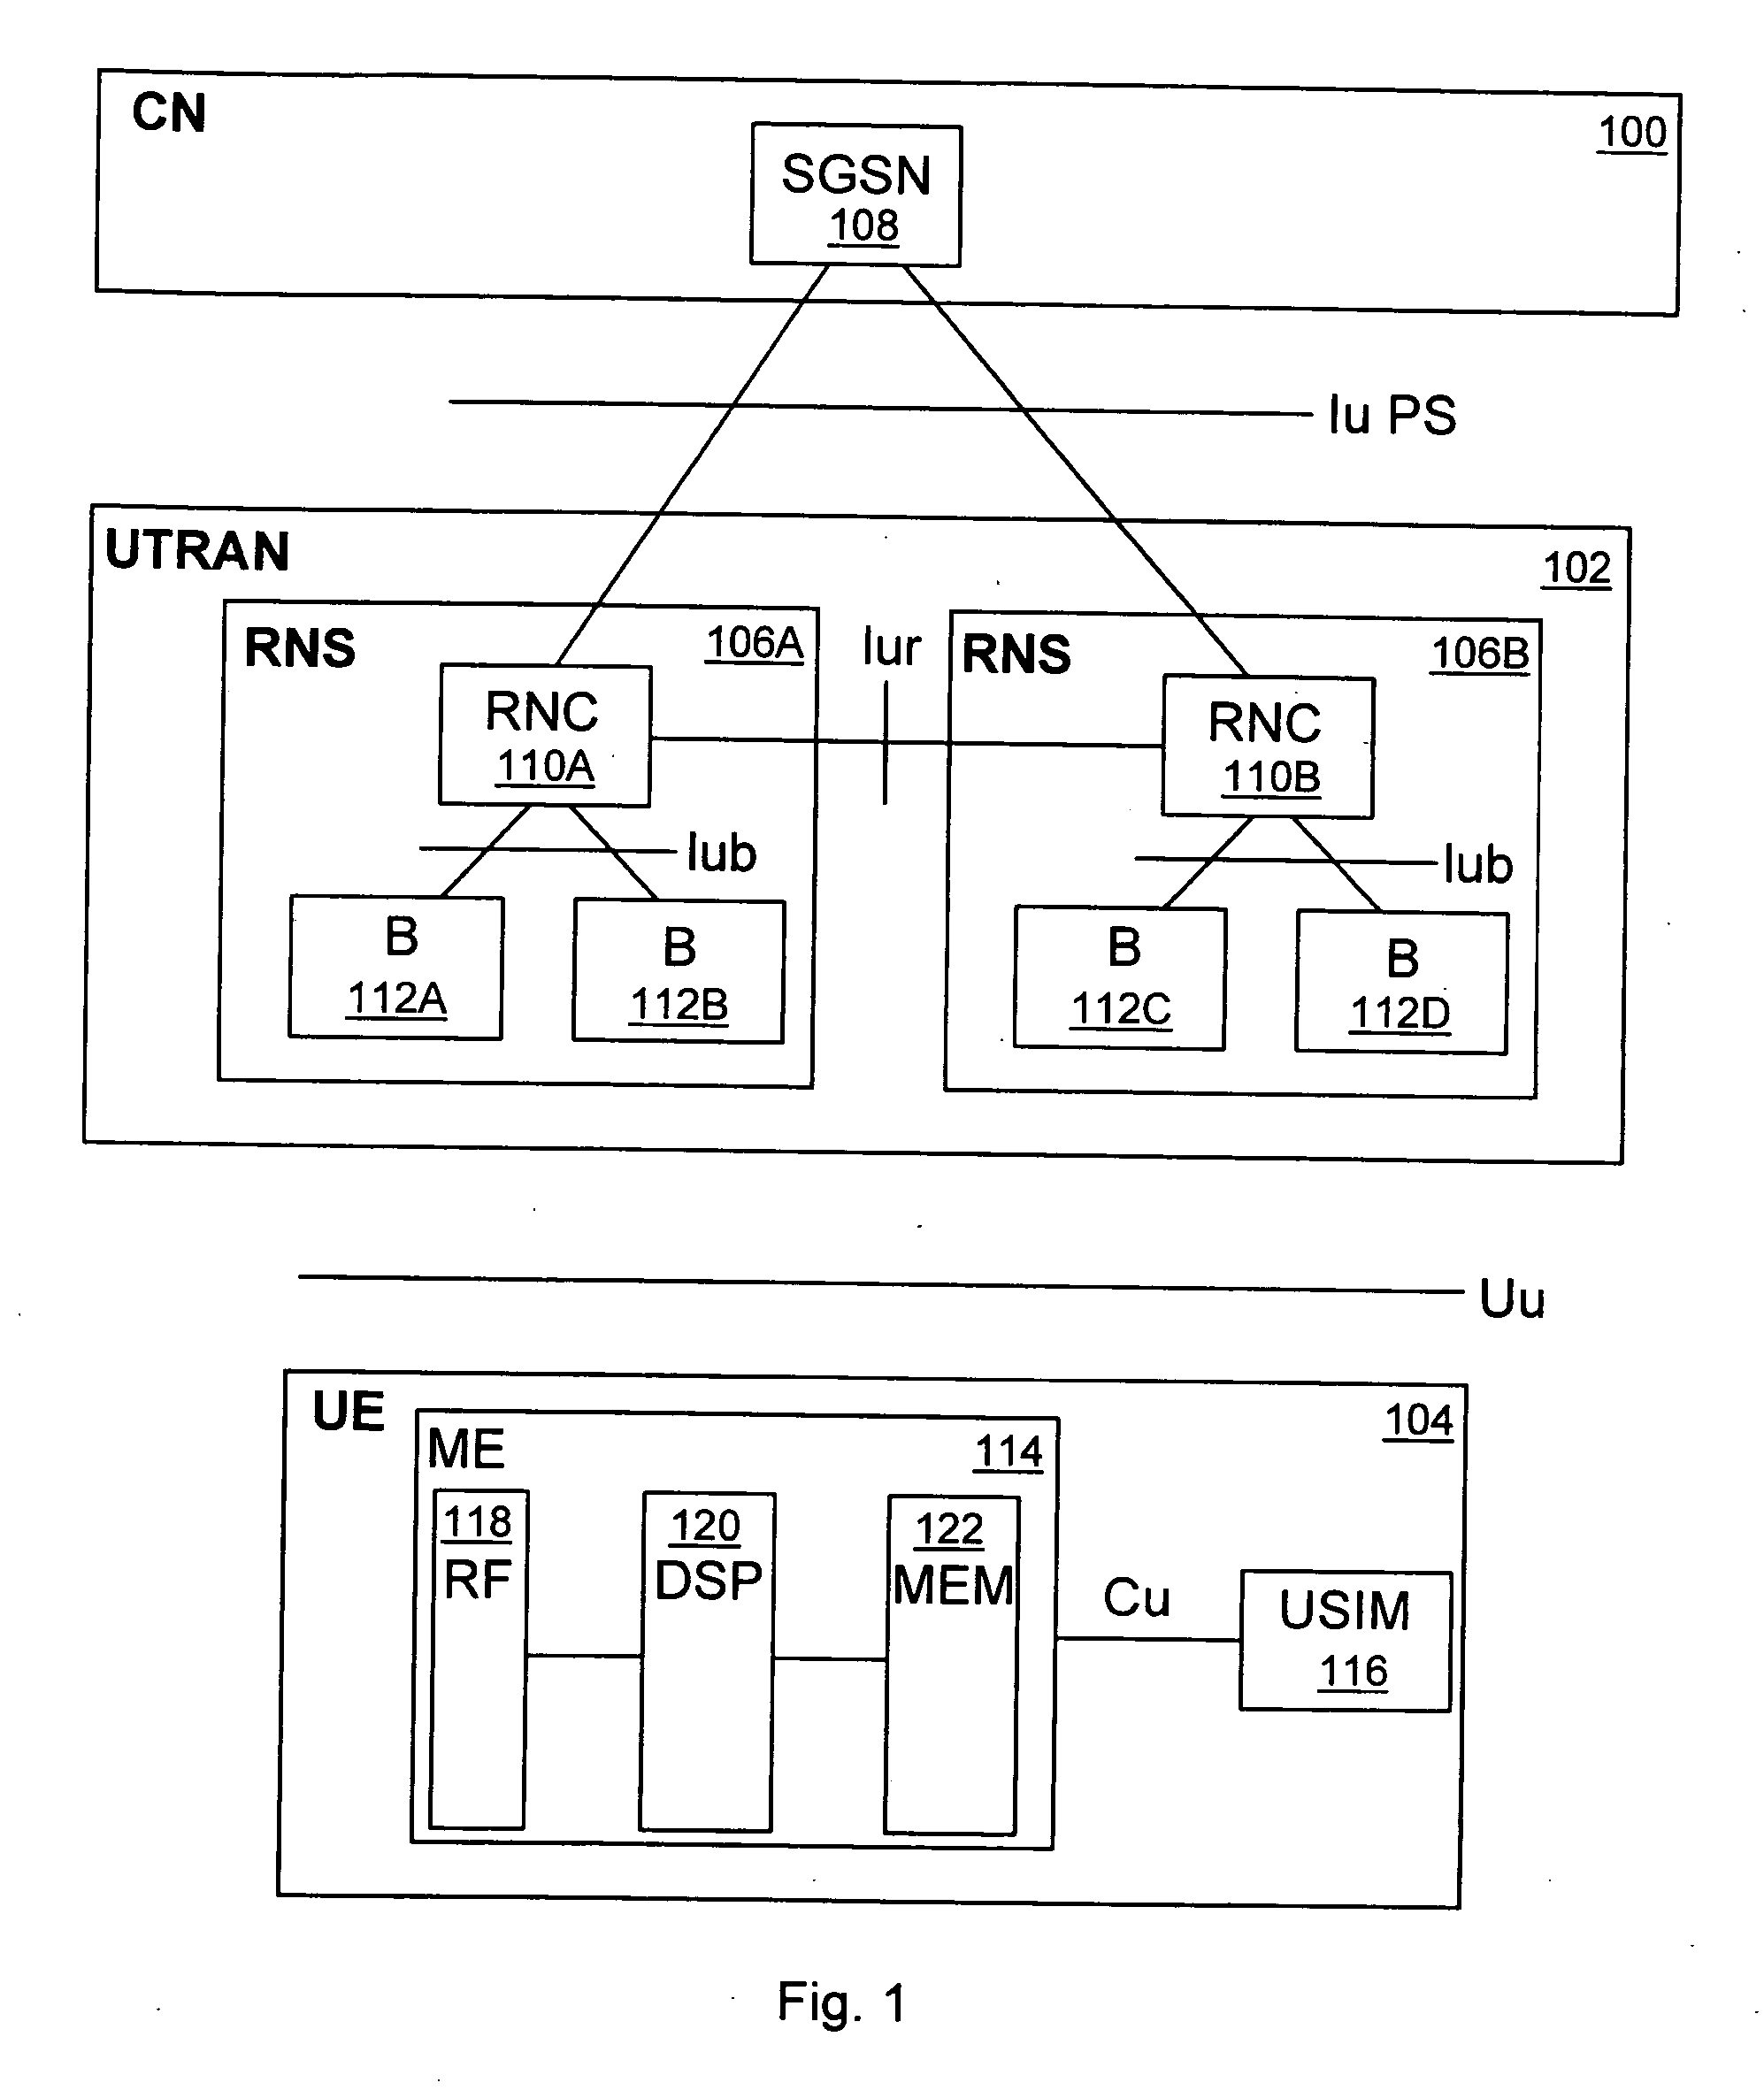 Radio resource control in HSUPA system